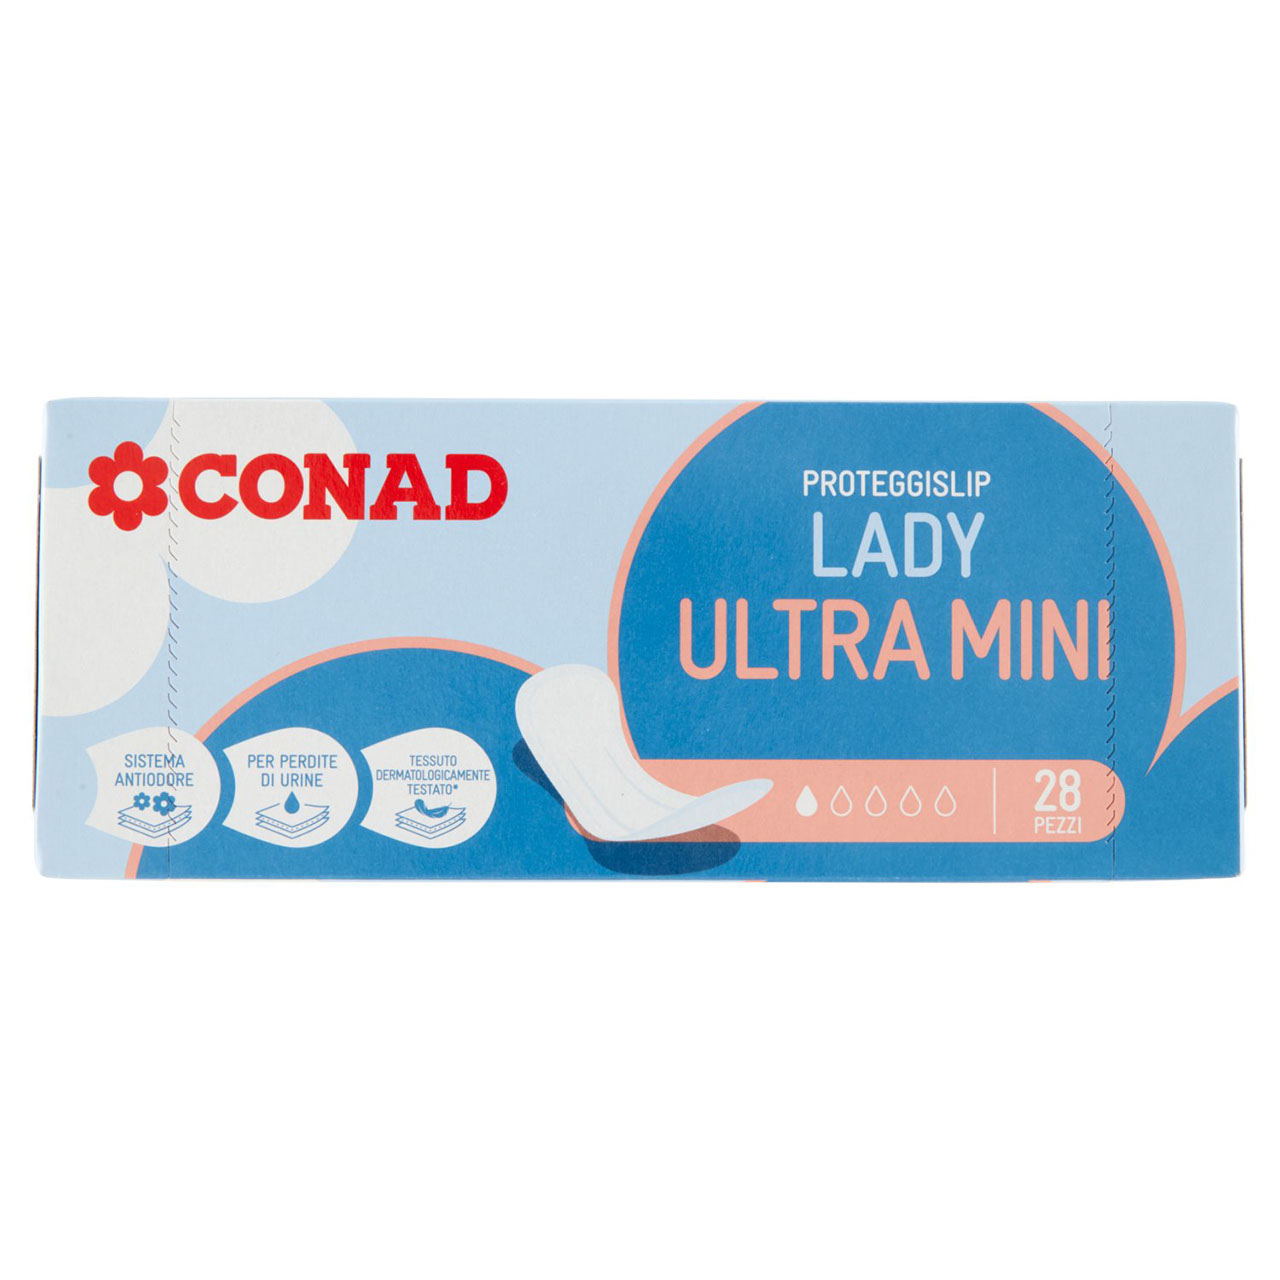 Proteggislip Lady Ultra Conad in vendita online